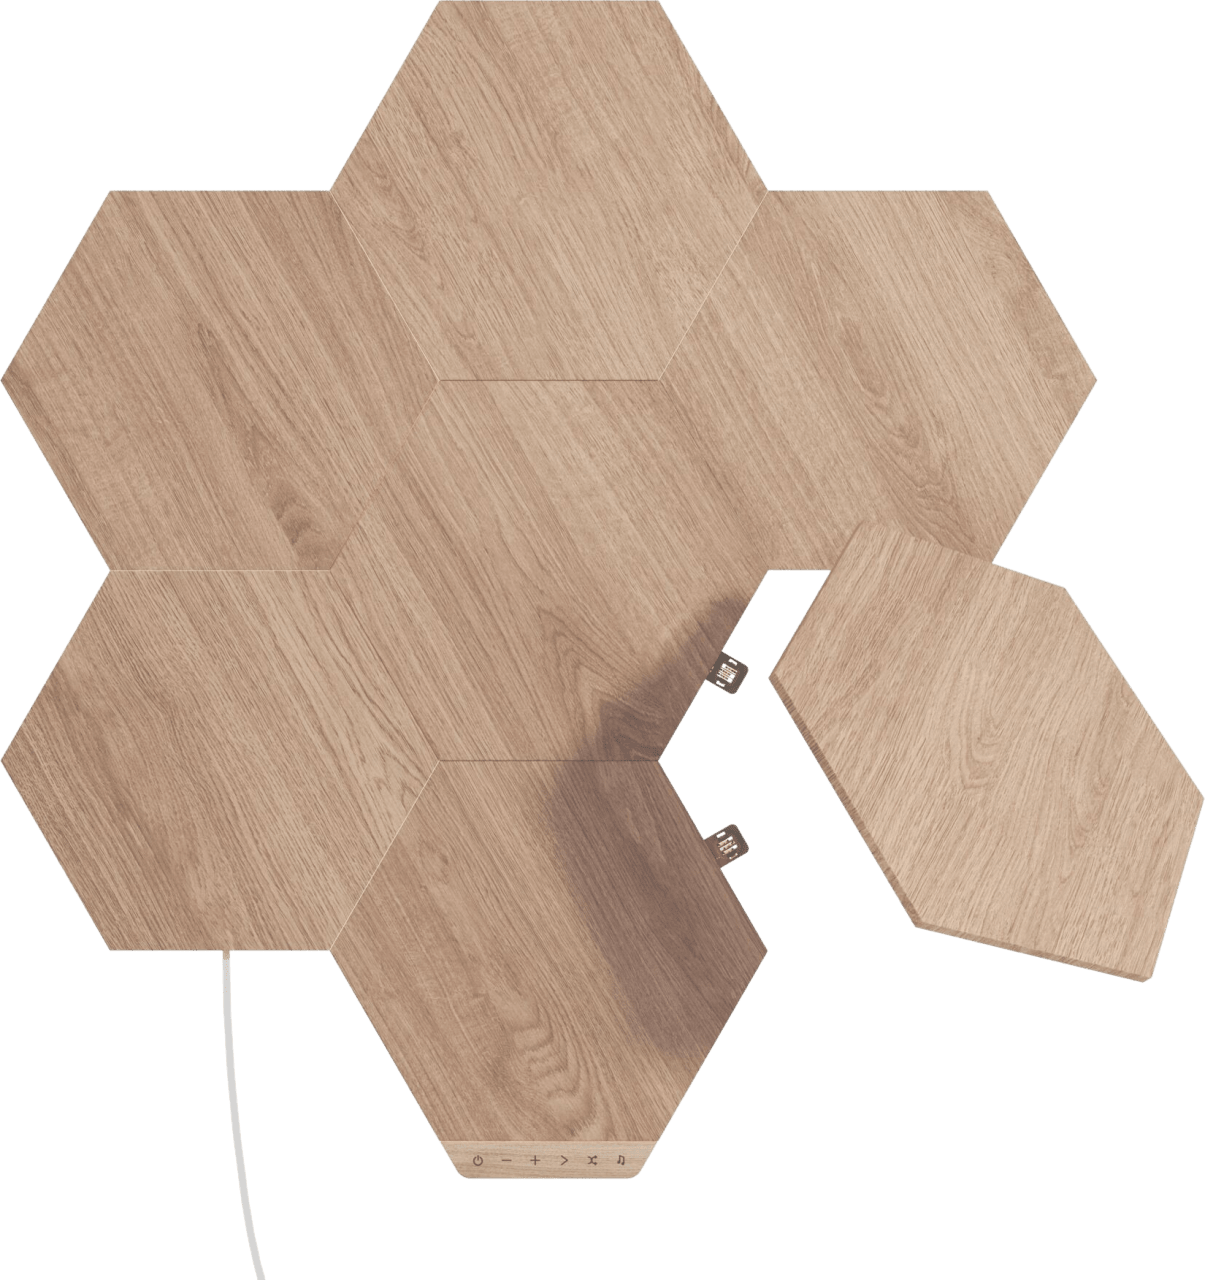 Holz Nanoleaf Elements Wood Look Hexagons Starter Kit 7x.1